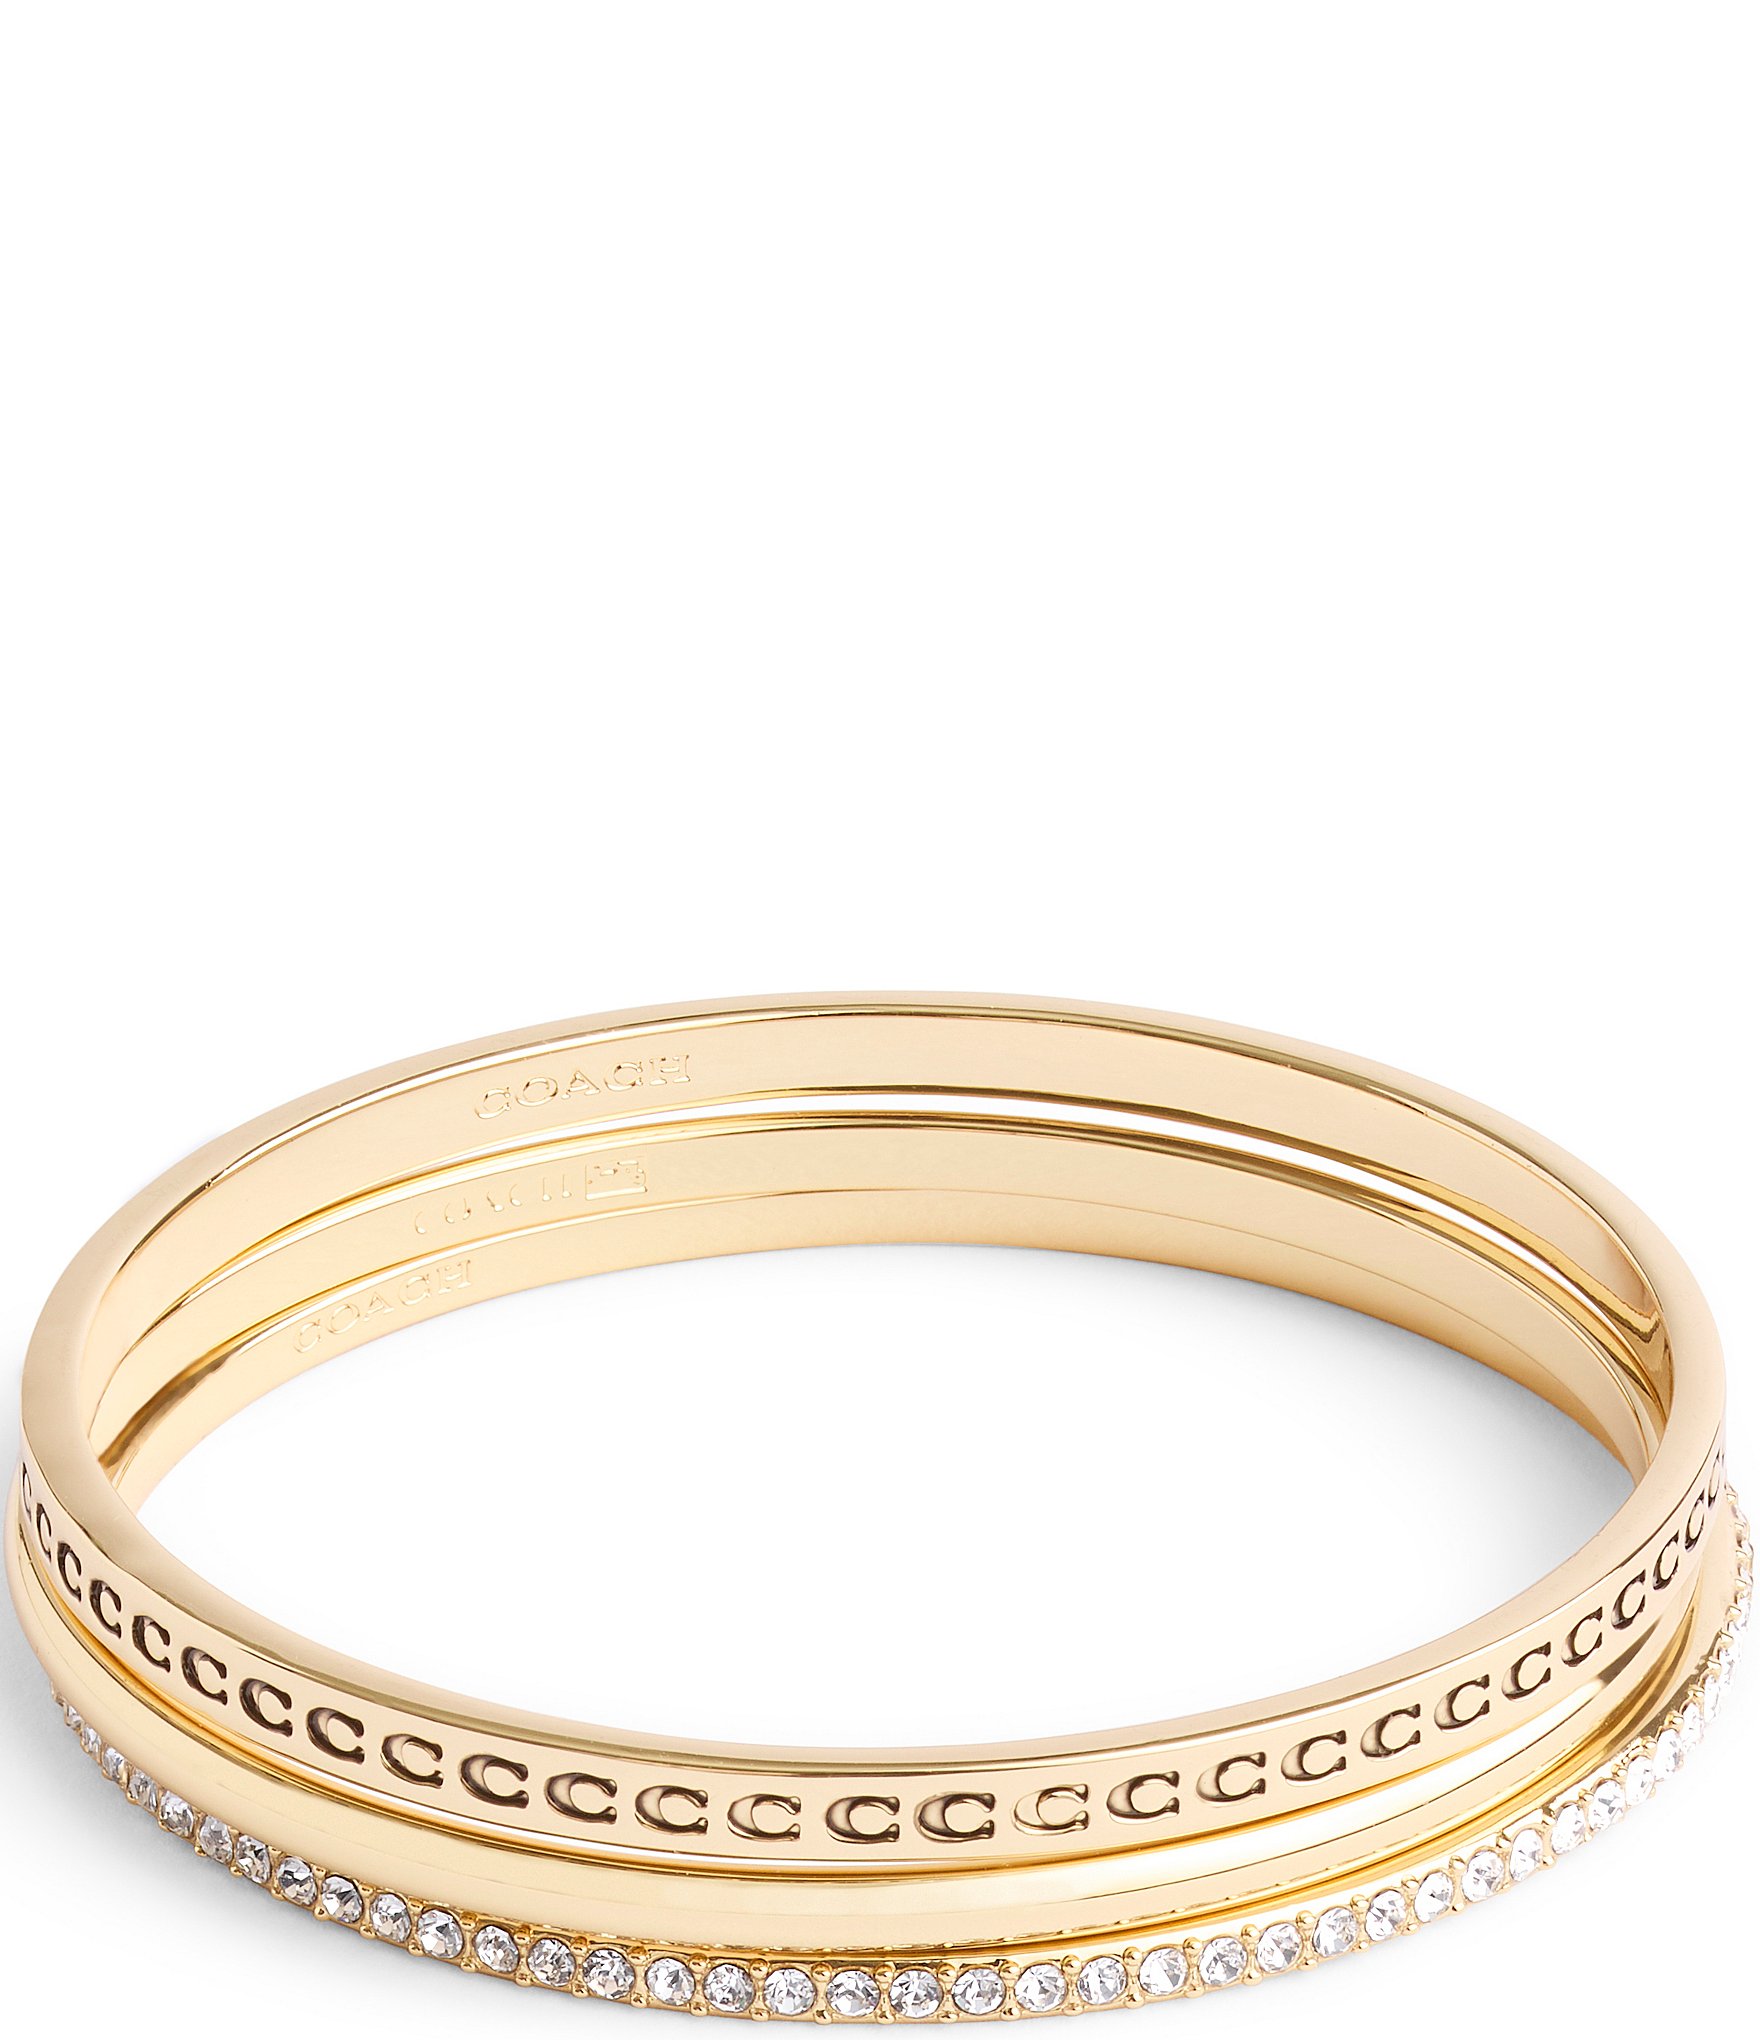 NWT Coach Bangle Bracelet/ROSE GOLD | Bangles, Bangle bracelets, Bracelets